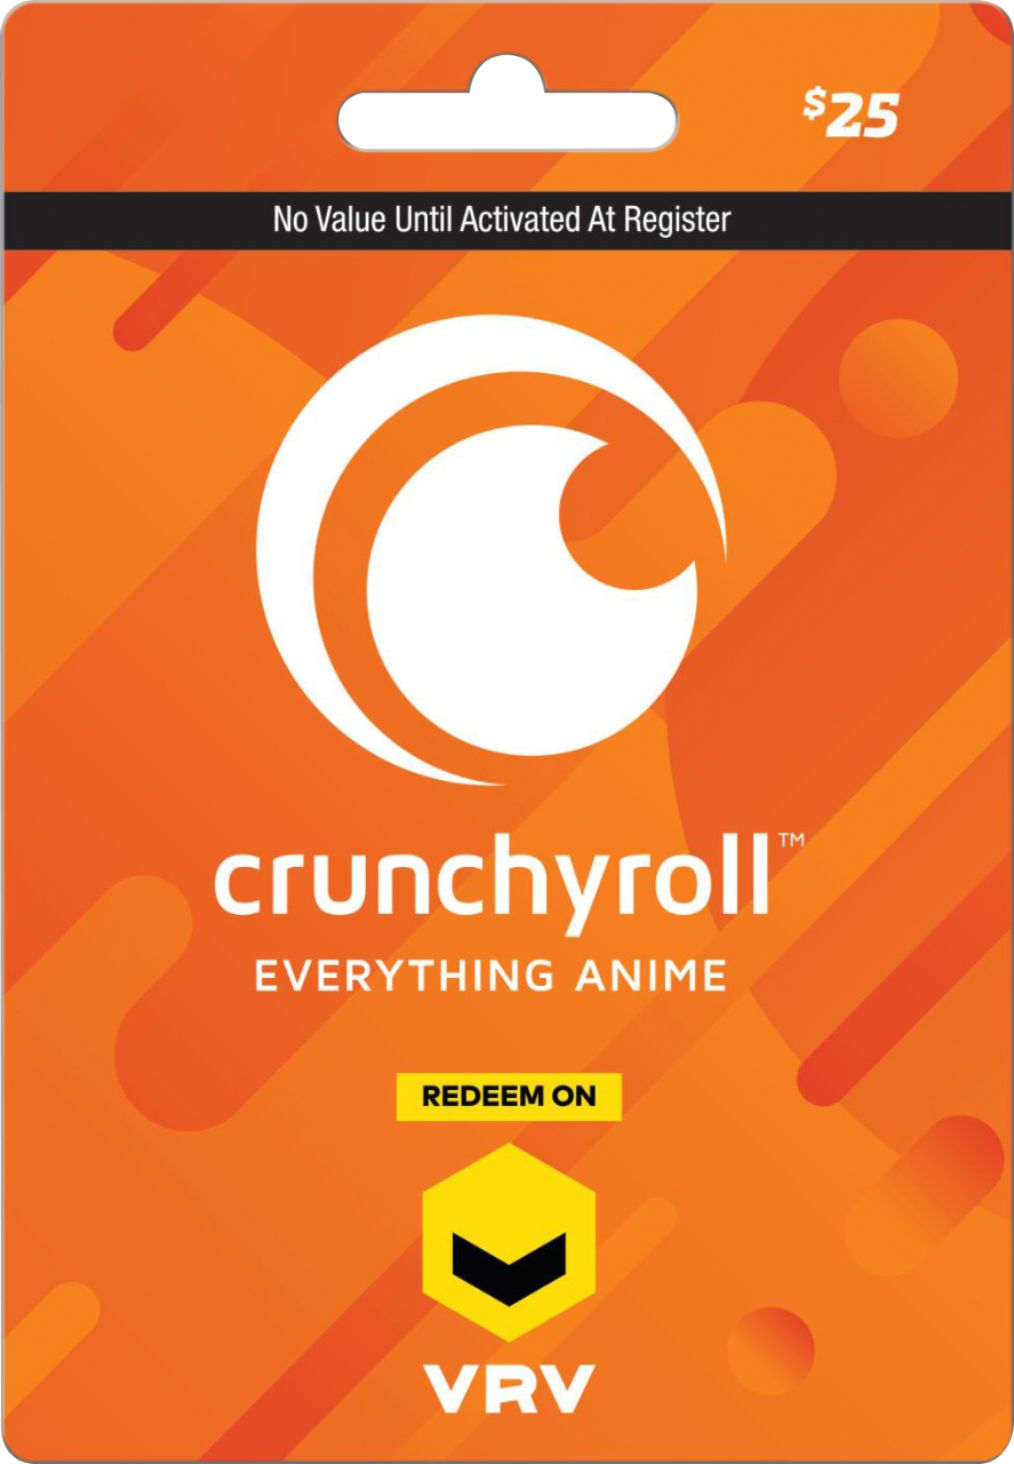 How Much Is Crunchyroll Premium? Answered